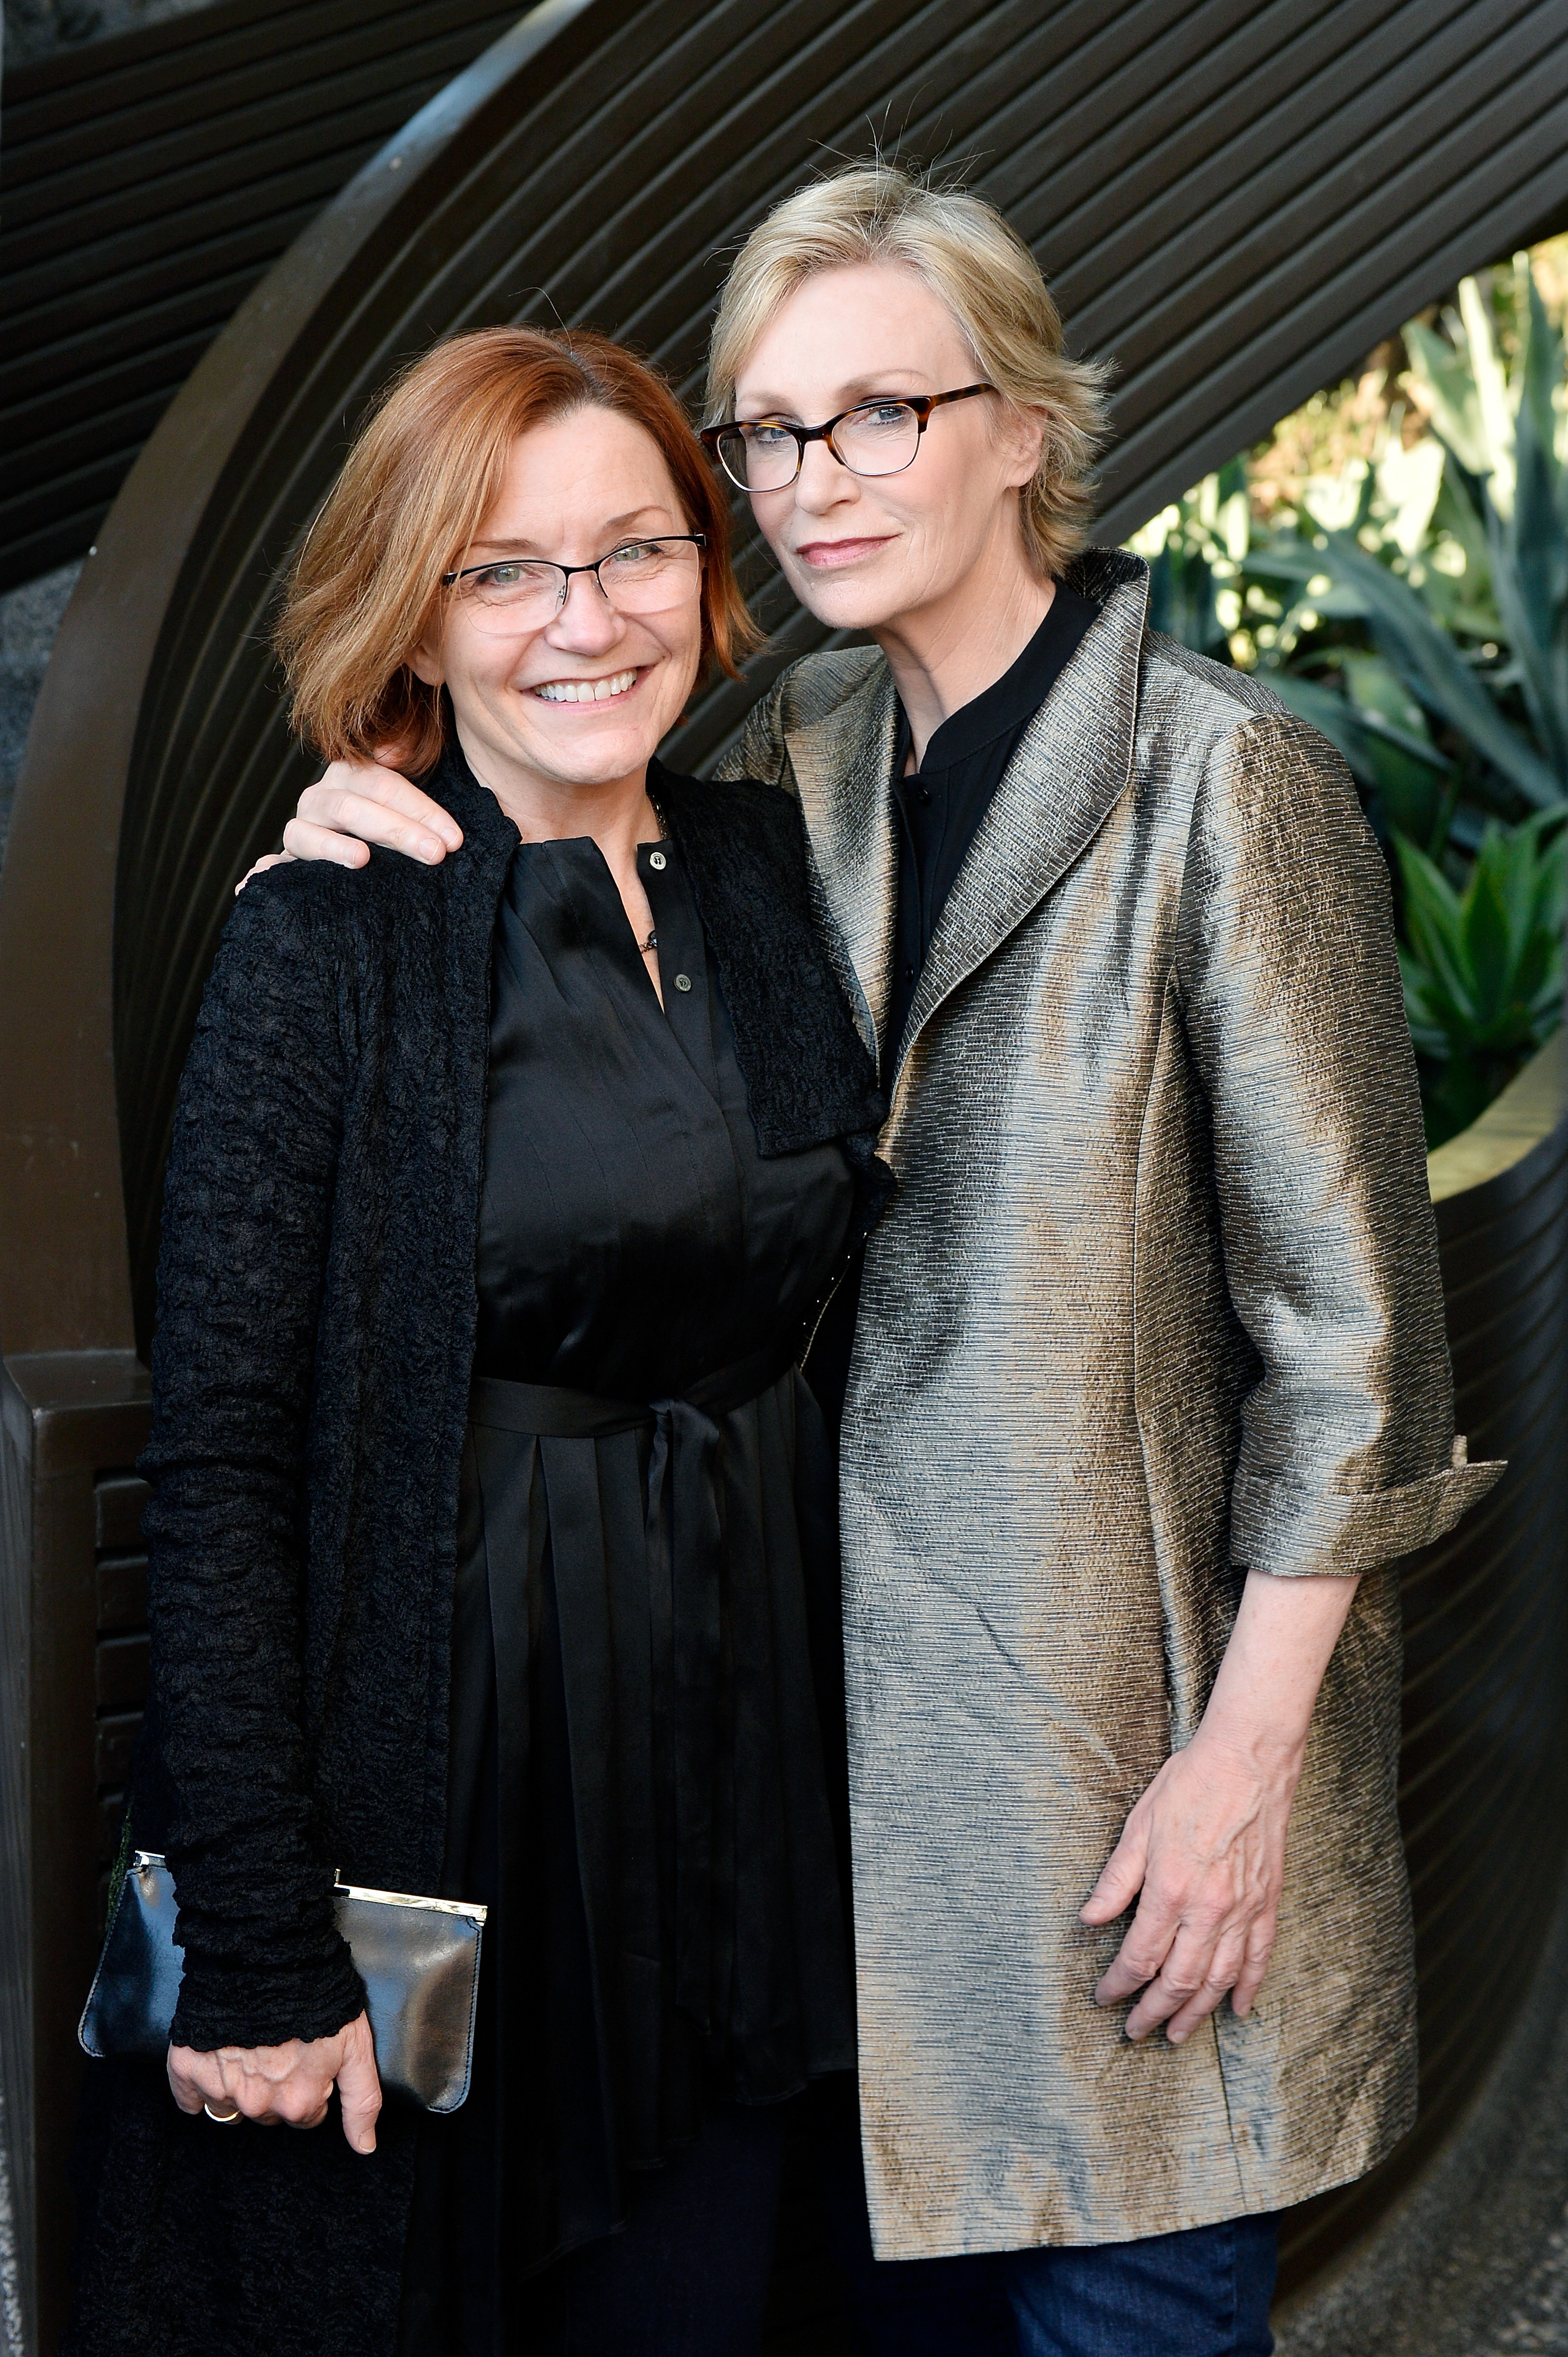 Jennifer Cheyne and Jane Lynch at a formal event